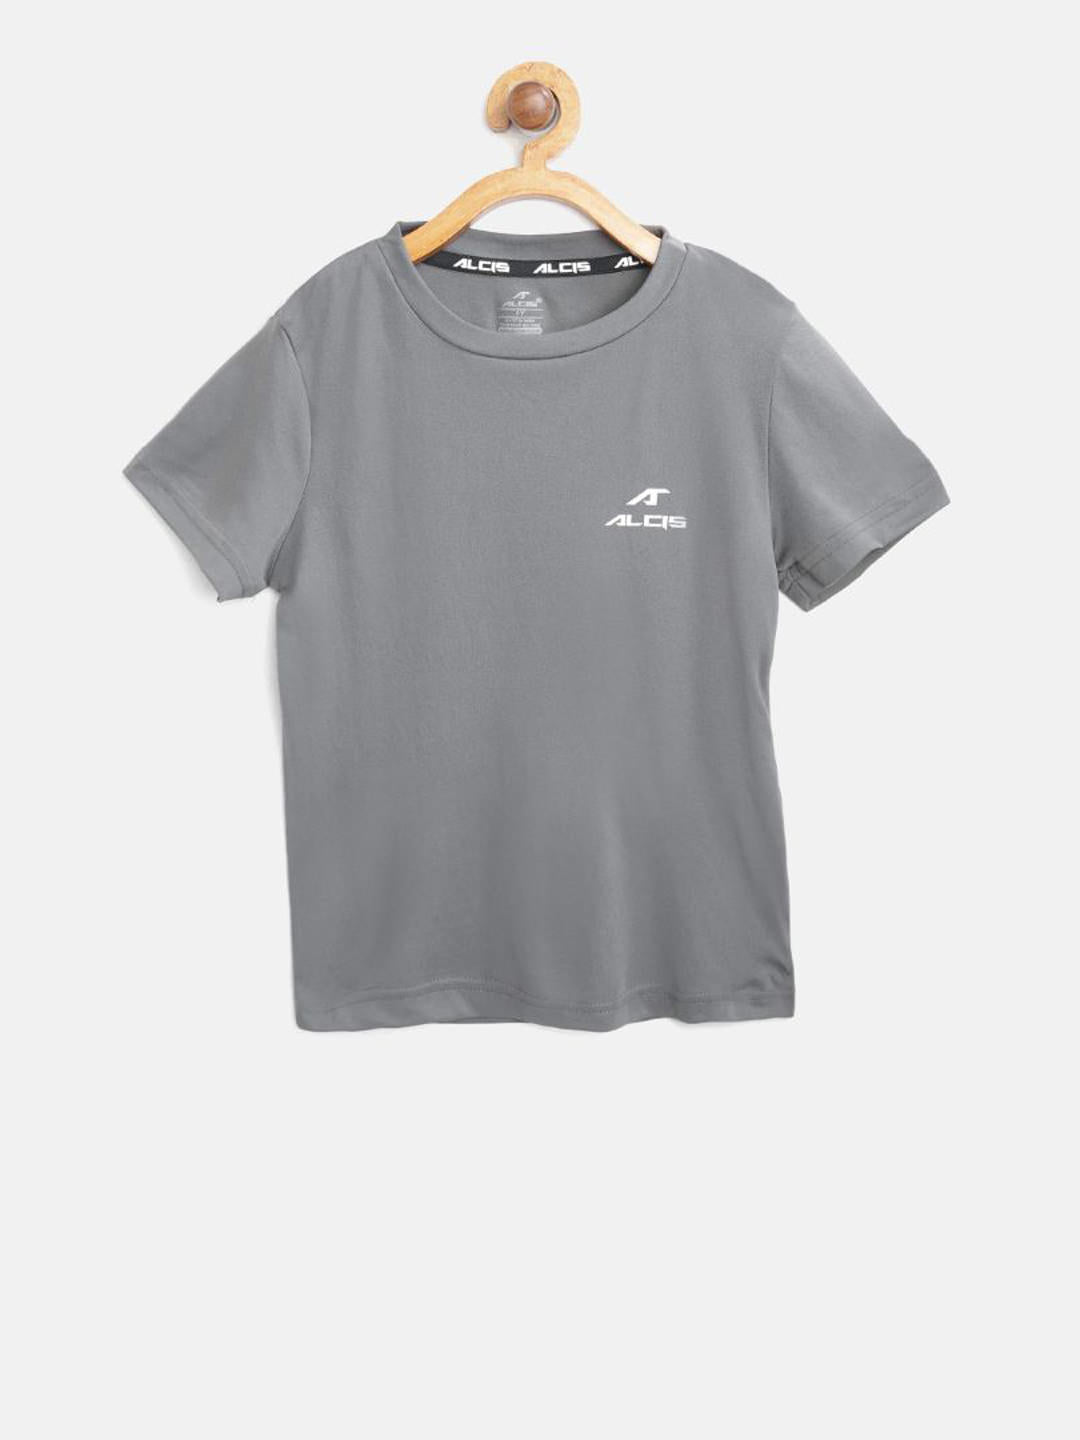 Alcis Boys Grey Solid Slim Fit Round Neck T-shirt BTE8032-4